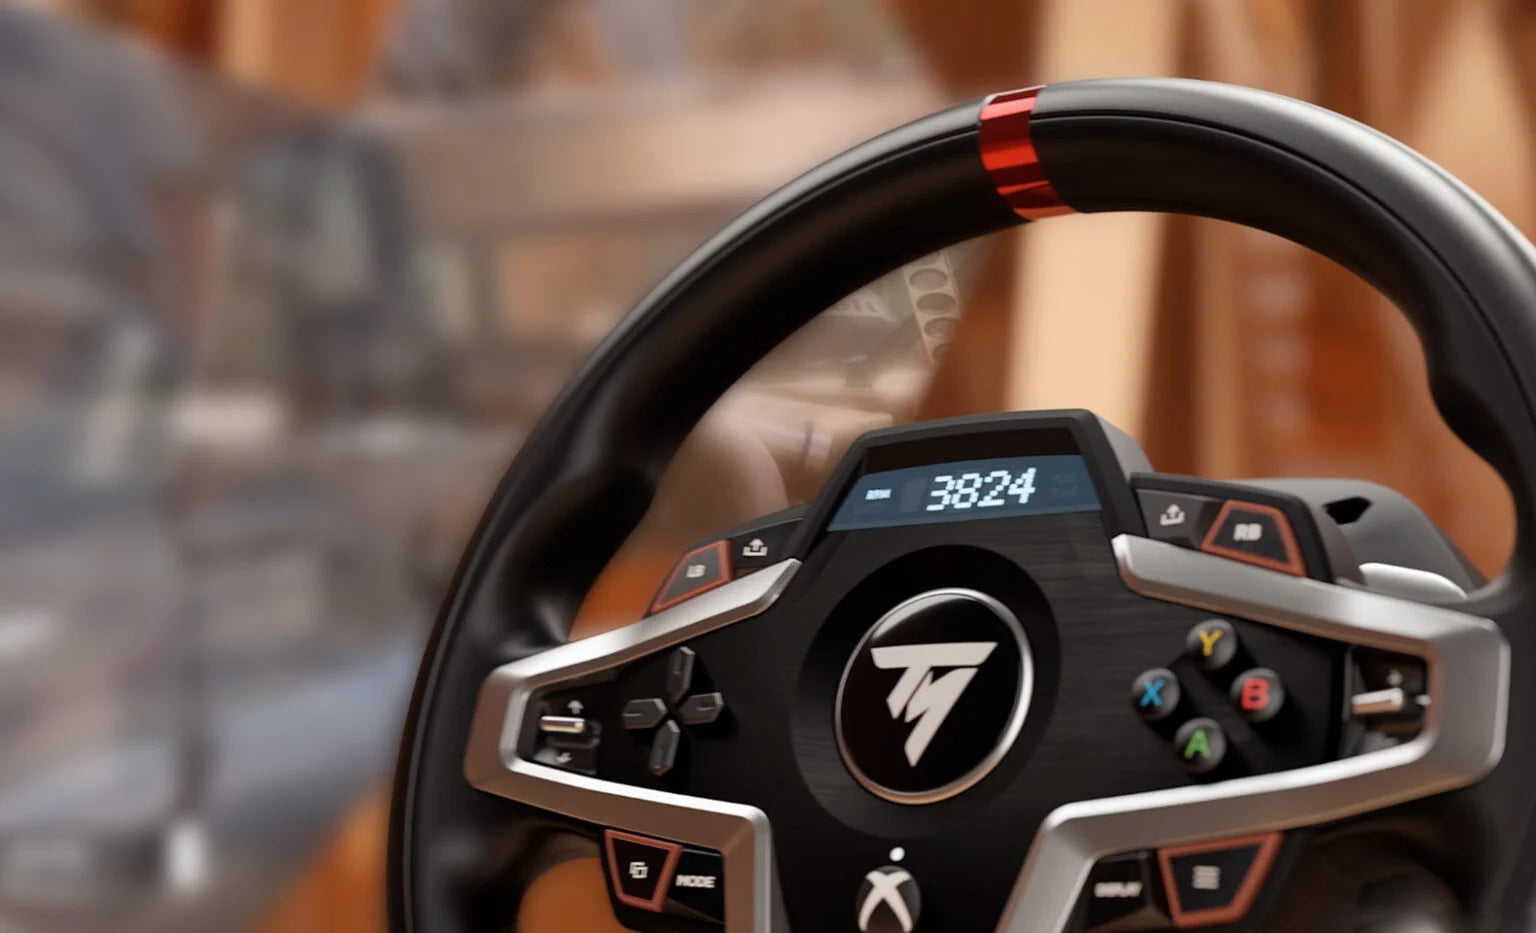 Thrustmaster T128 X Force Feedback Racing Wheel for Xbox One Xbox X